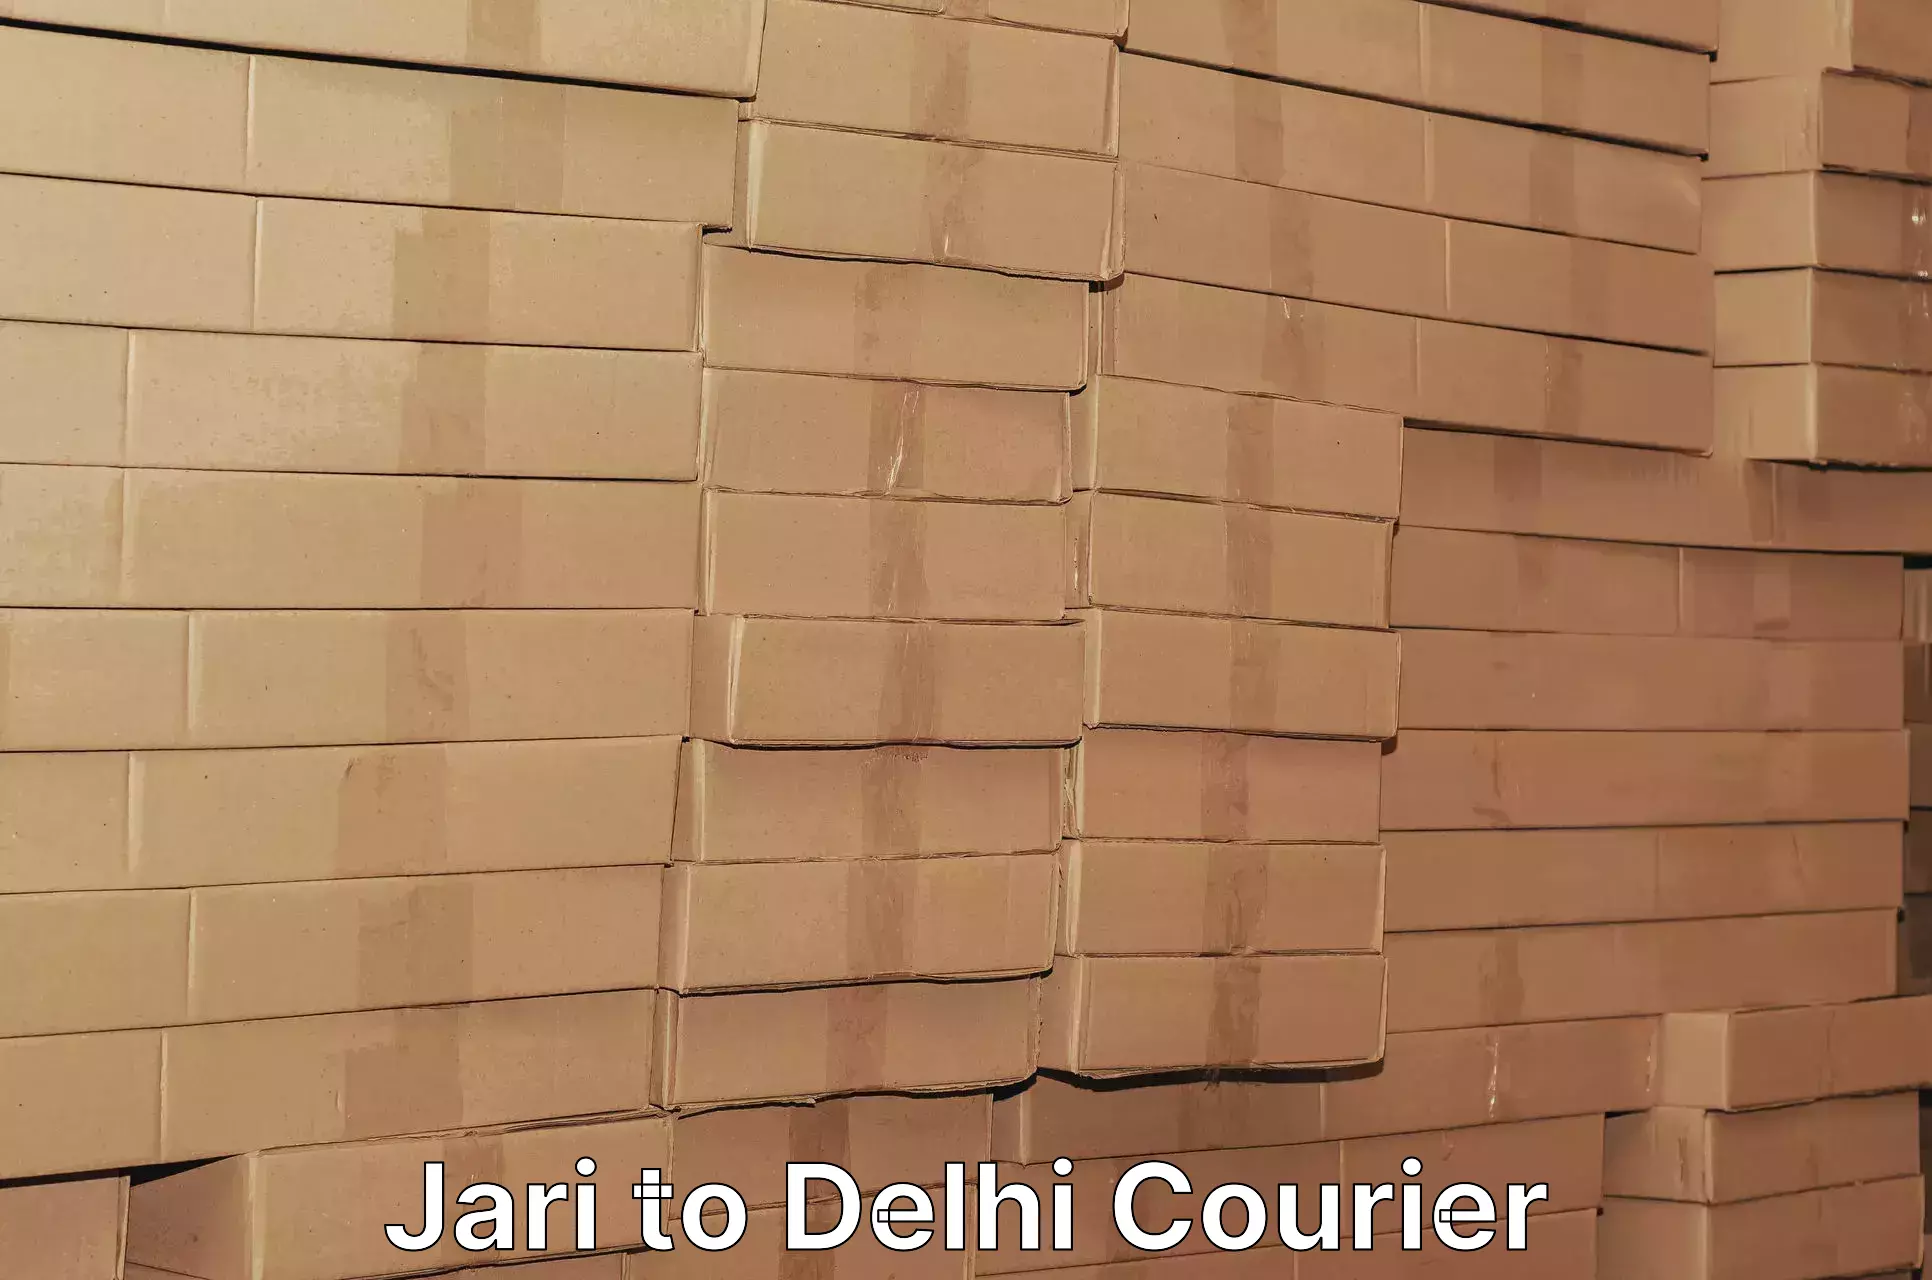 Courier service innovation Jari to Delhi